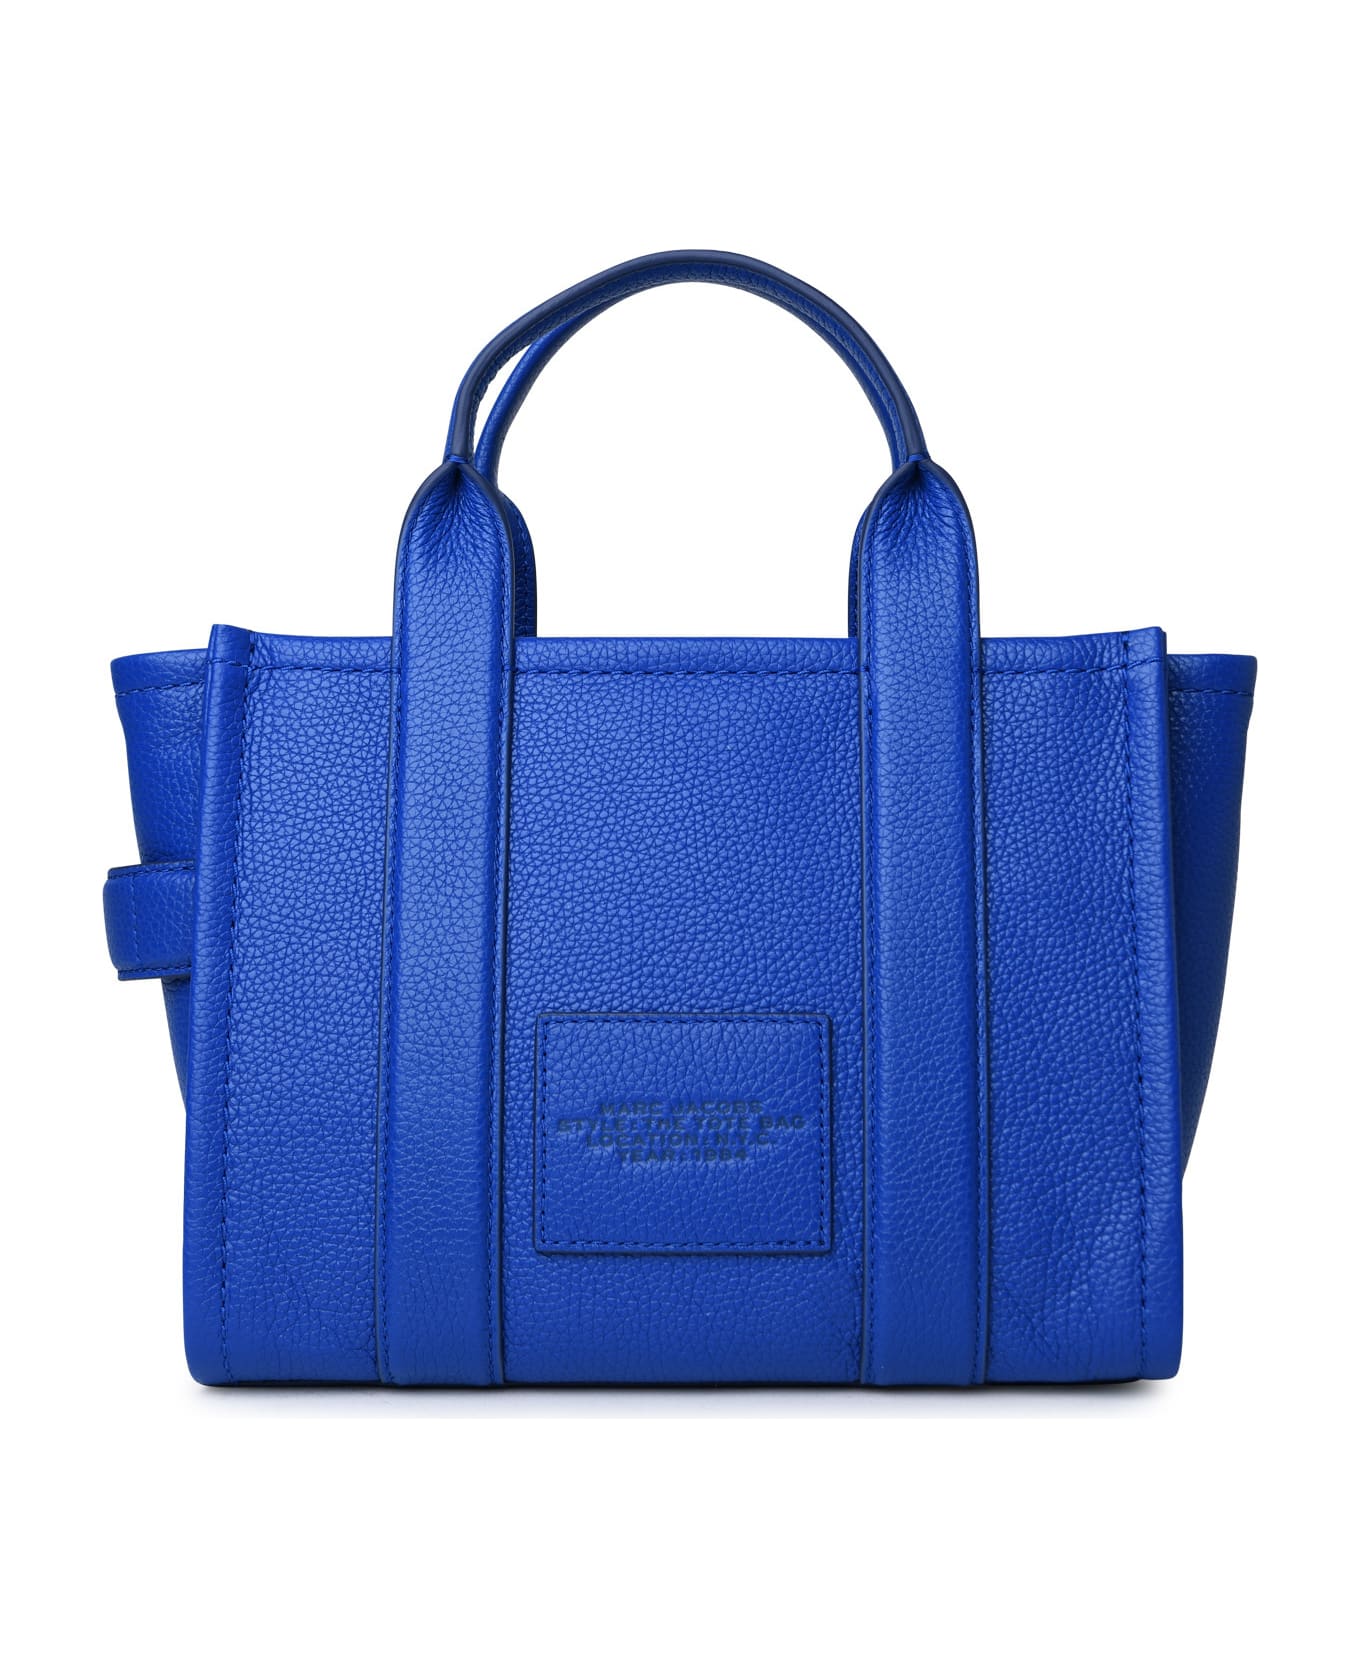 Marc Jacobs 'tote' Cobalt Leather Bag - Blue